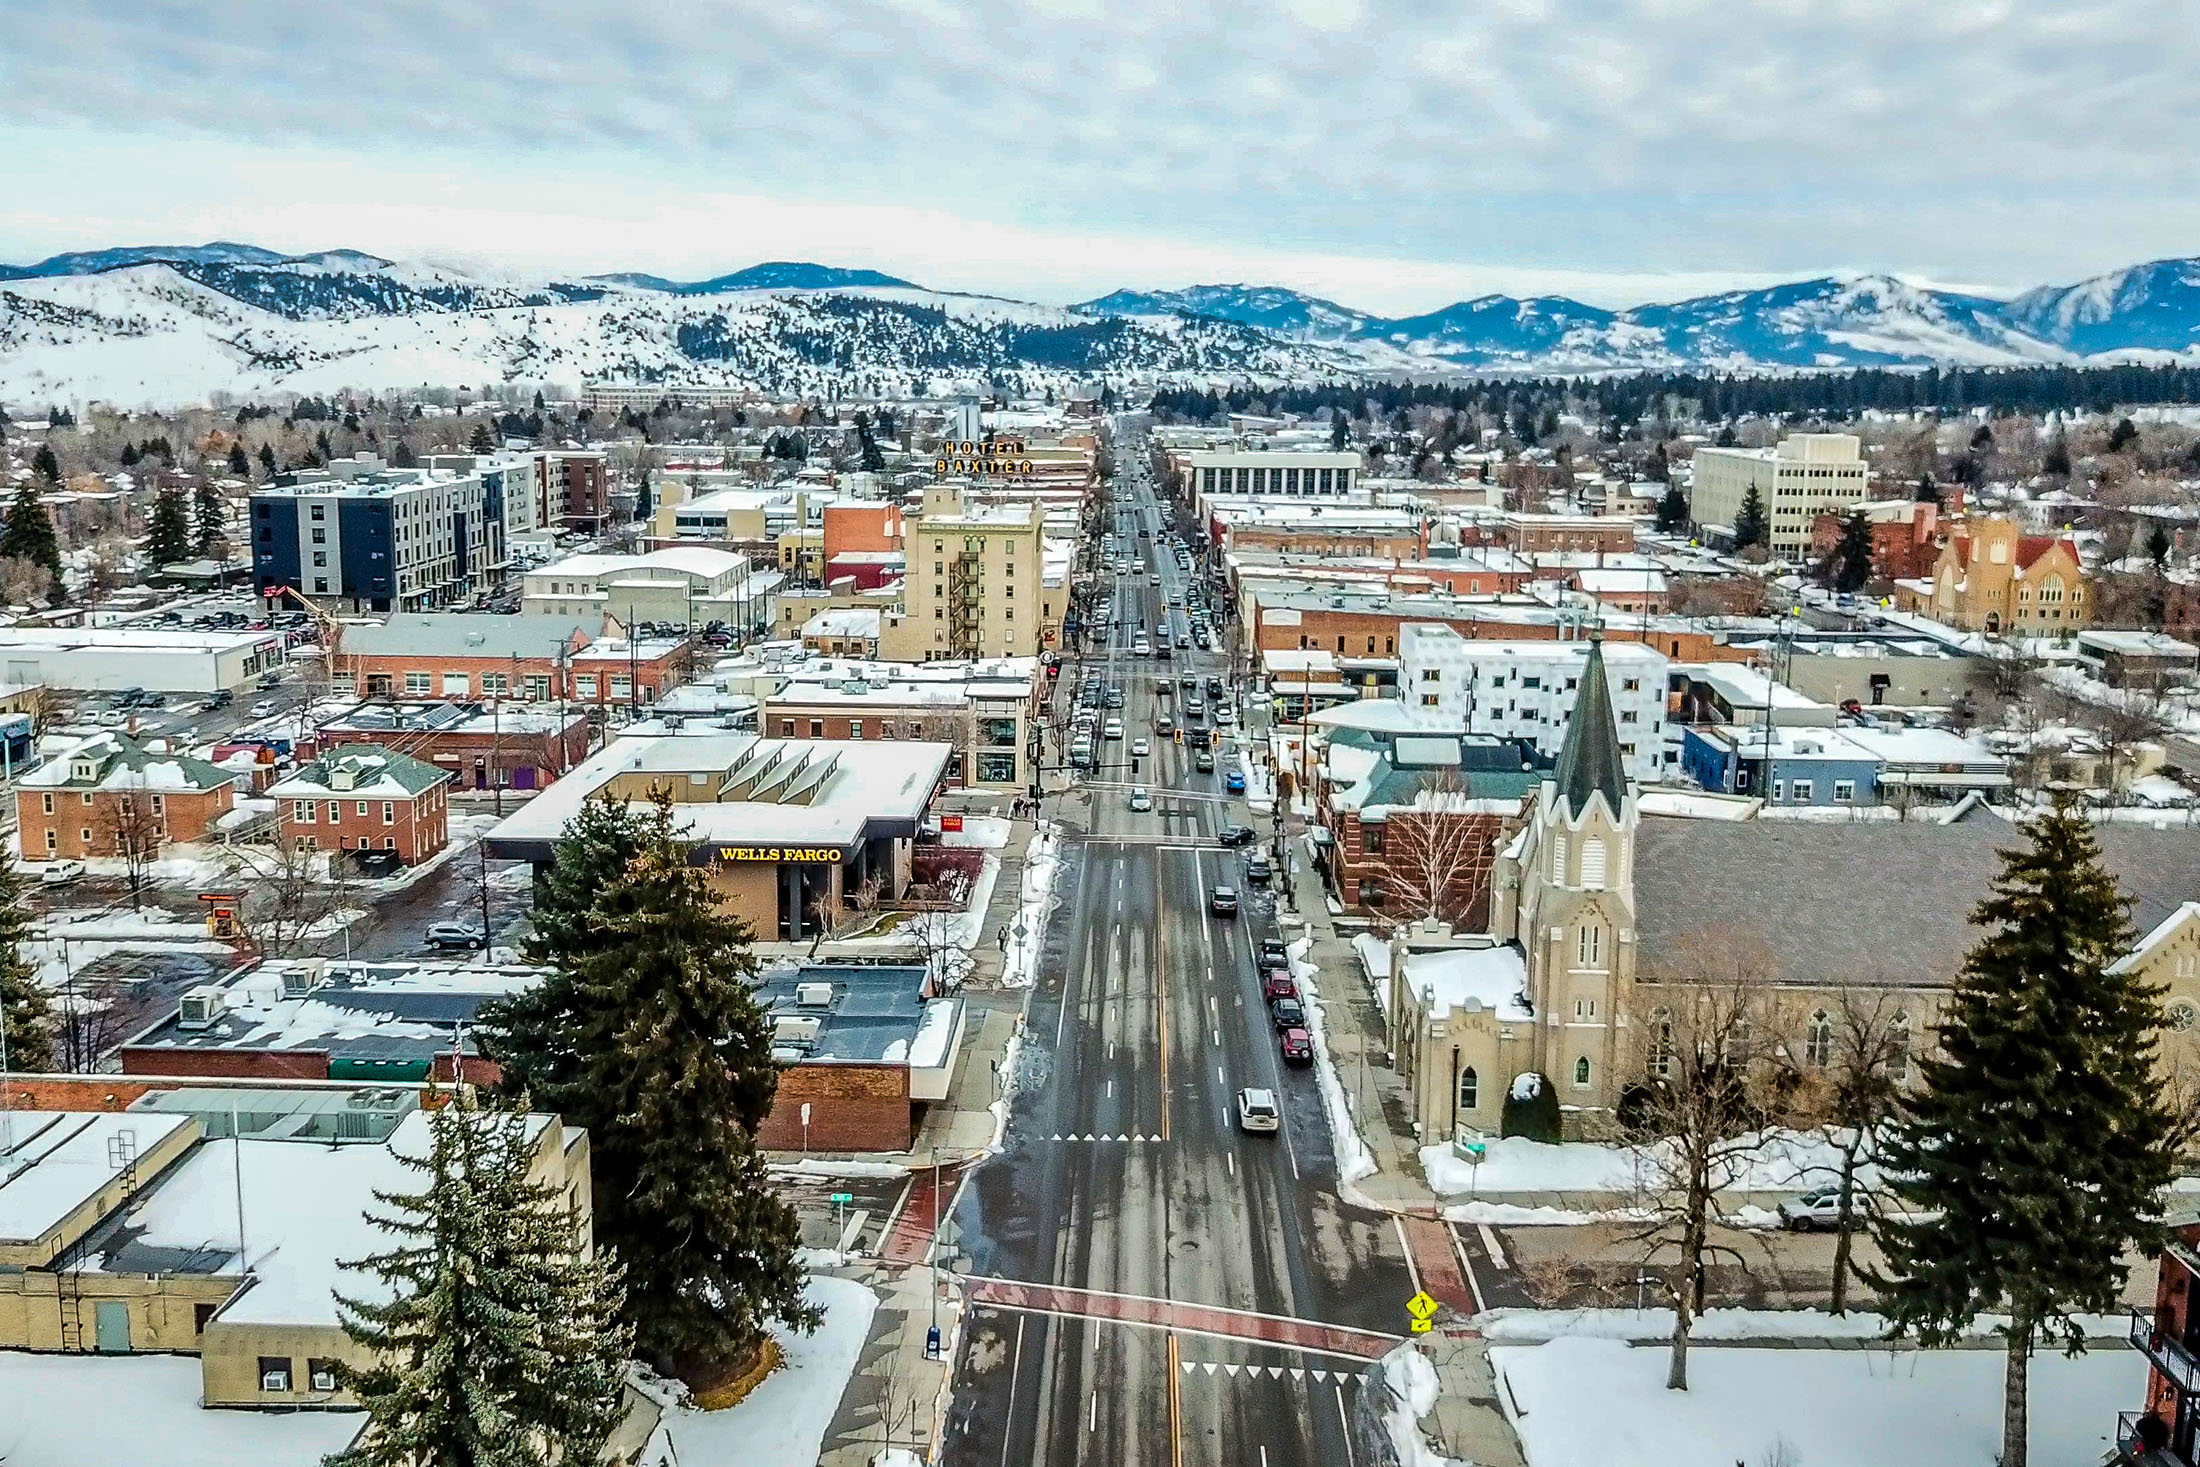 Nowhere to go: Montana's affordable housing crisis